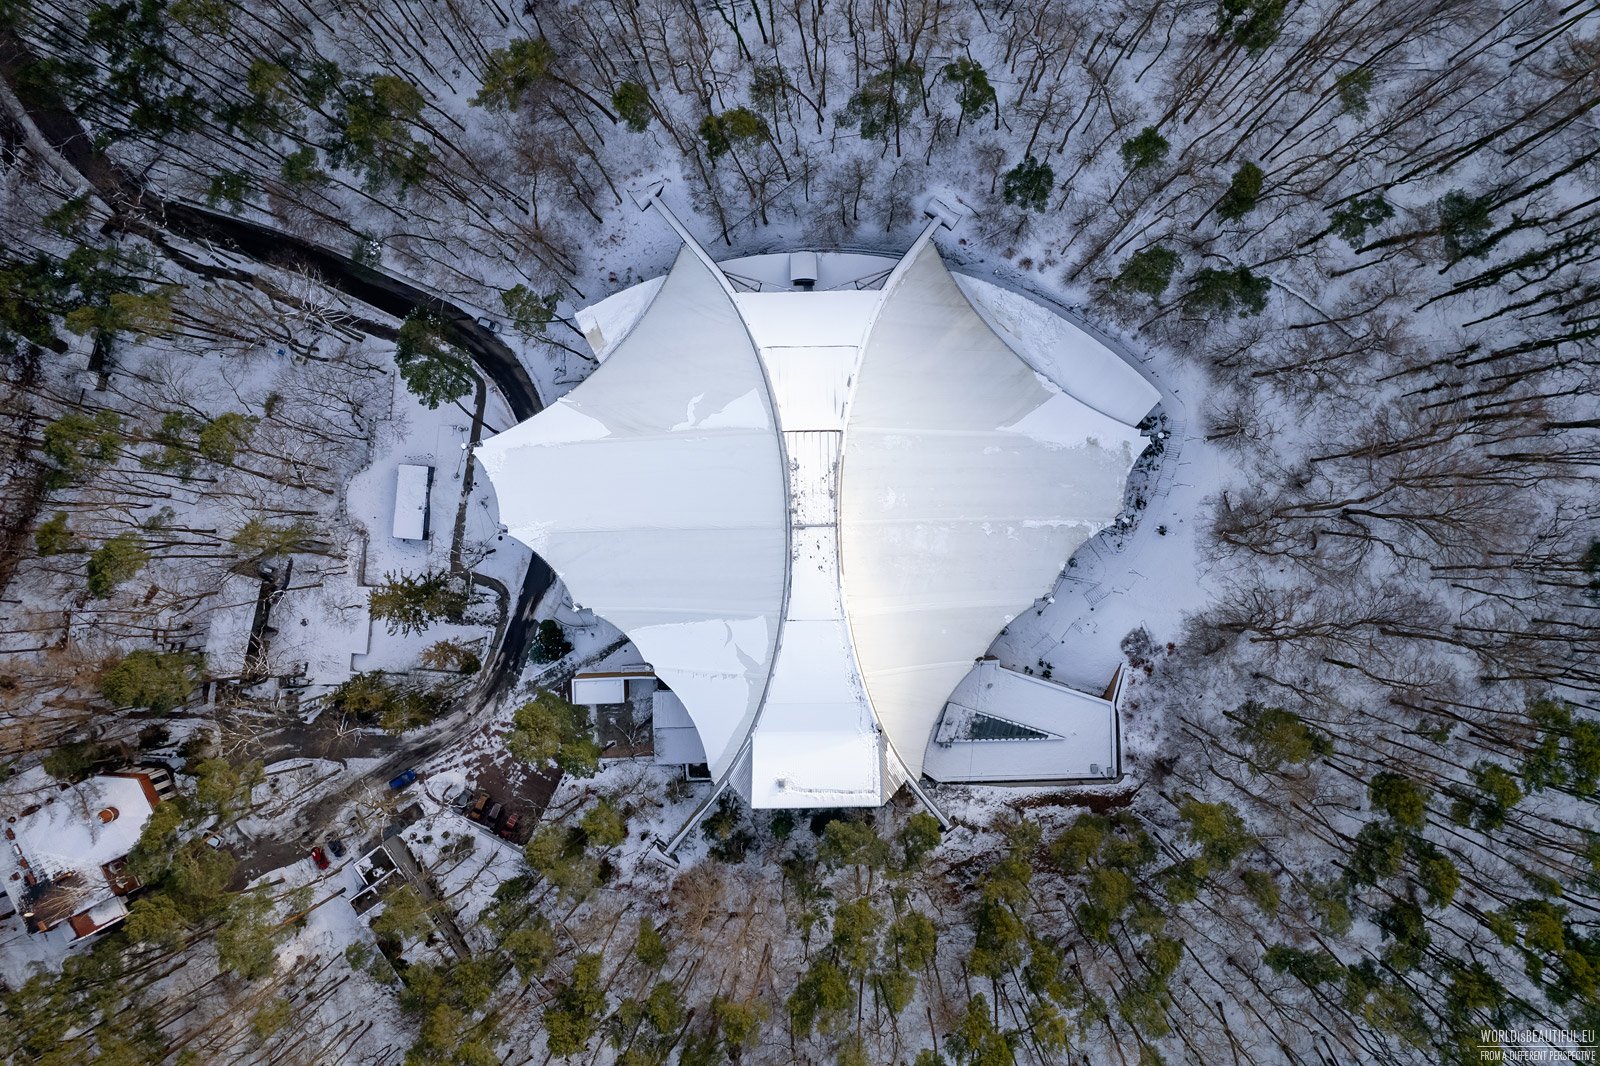 Forest Opera in winter